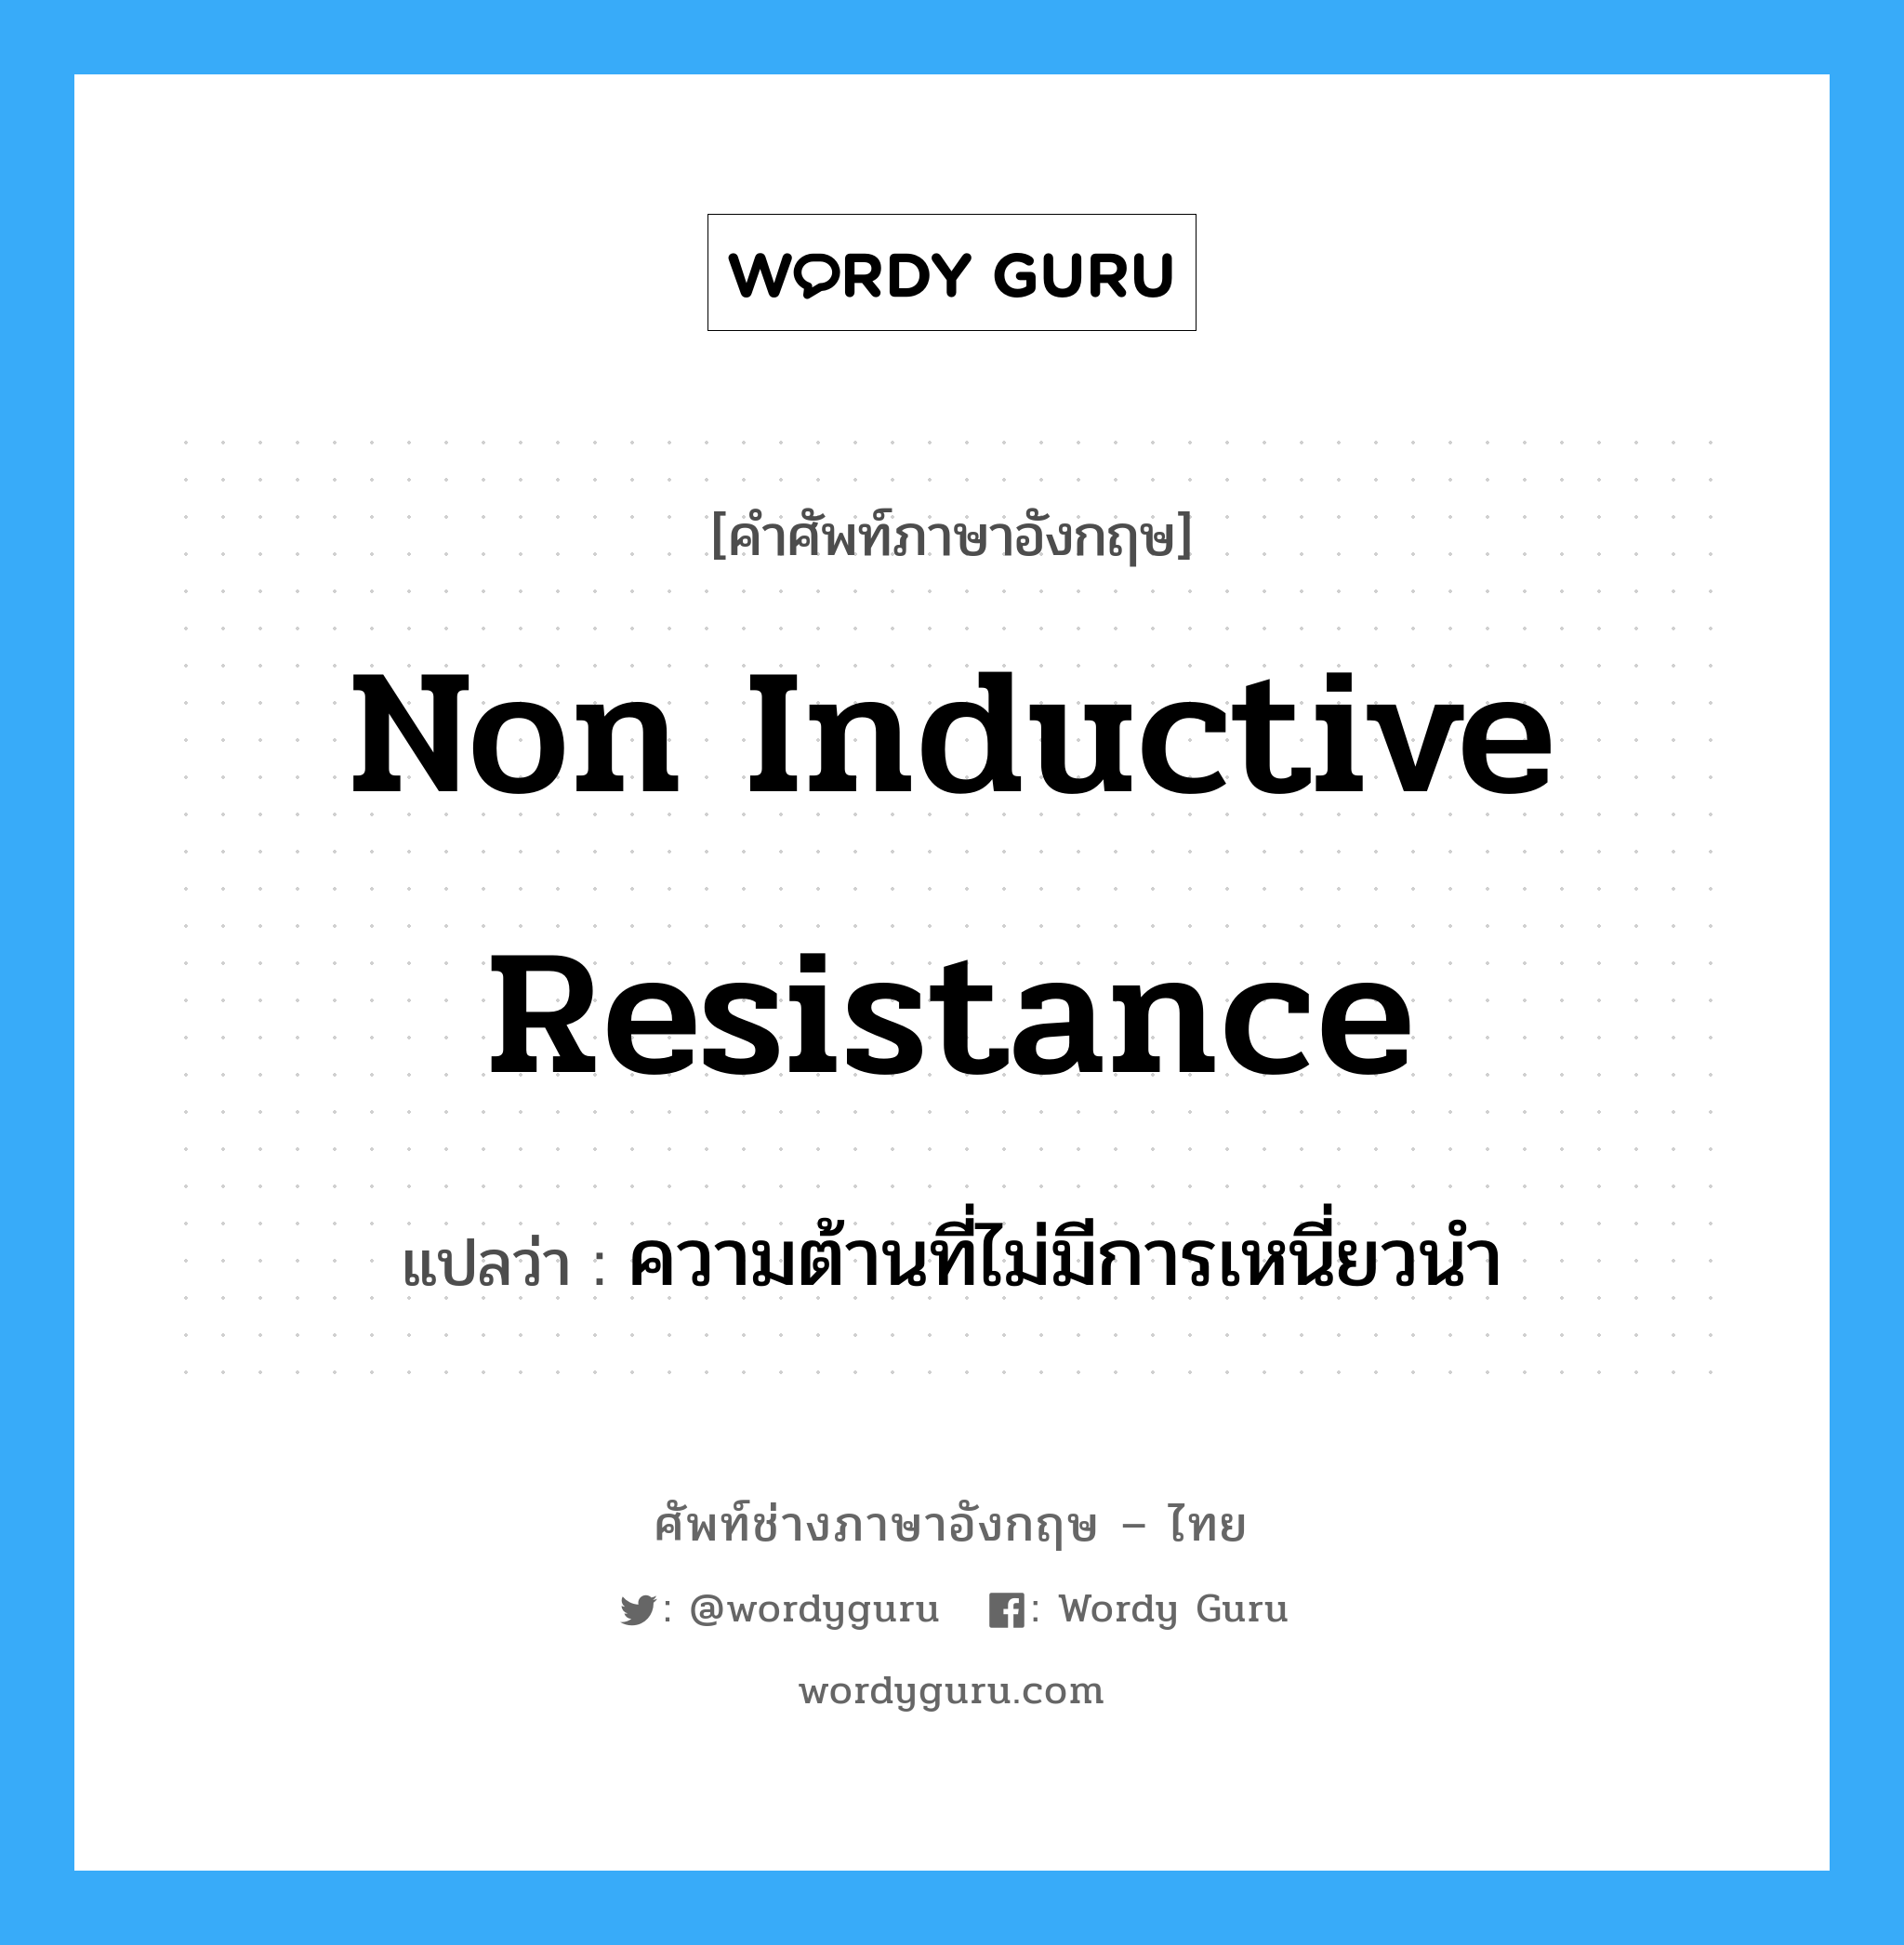 non inductive resistance แปลว่า?, คำศัพท์ช่างภาษาอังกฤษ - ไทย non inductive resistance คำศัพท์ภาษาอังกฤษ non inductive resistance แปลว่า ความต้านที่ไม่มีการเหนี่ยวนำ